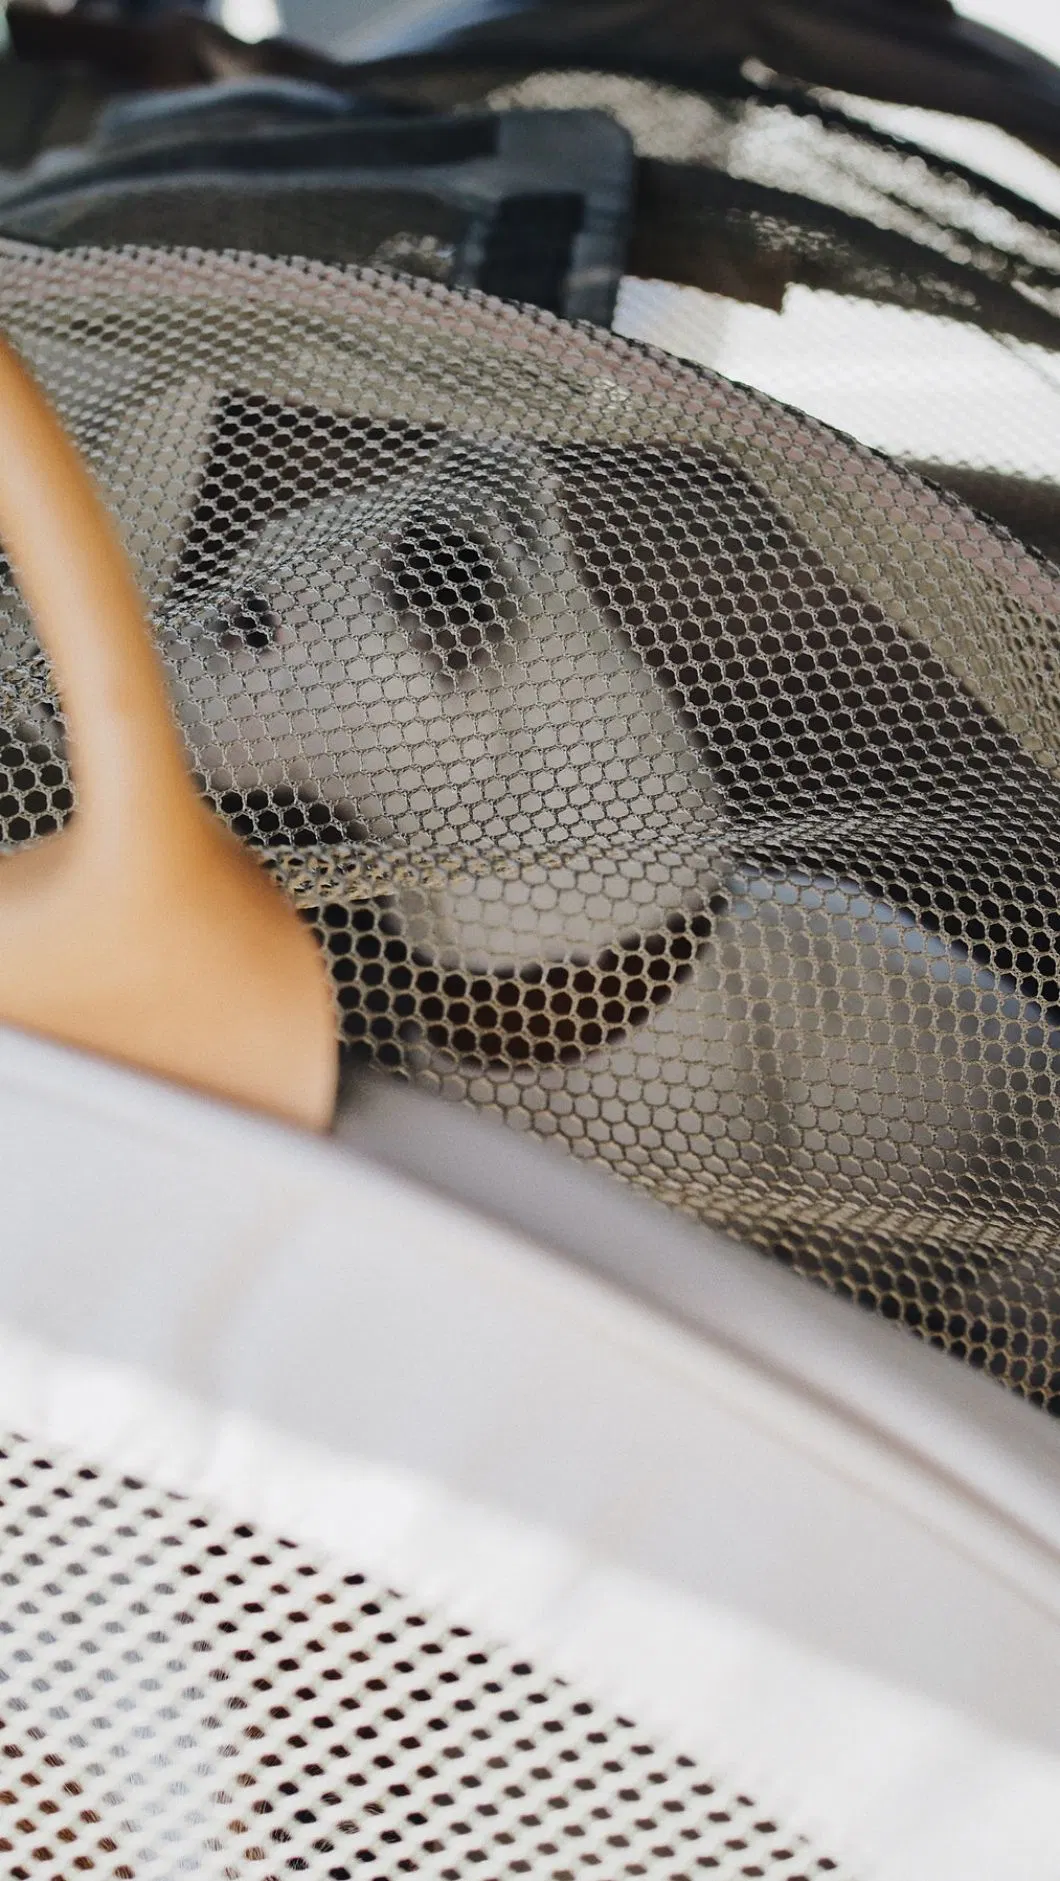 Round Eco Friendly Foldable Sofa Dog Car Seat Bed Car Transportation House Dog Bed